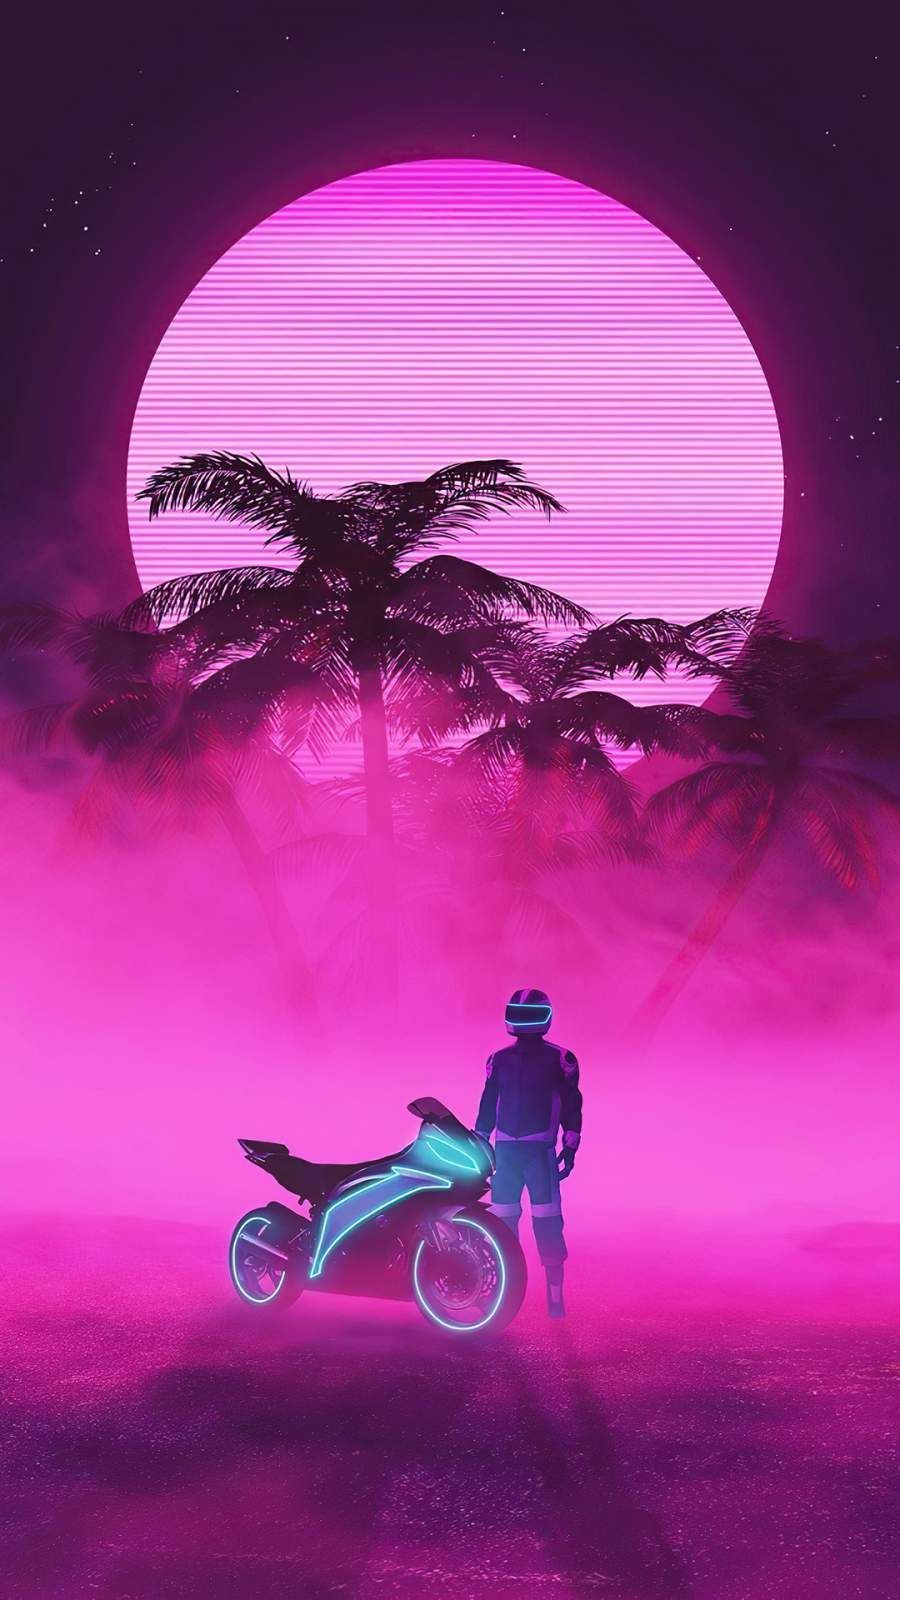 Neon Biker iPhone Wallpaper. Synthwave art, Neon noir, Cyberpunk aesthetic